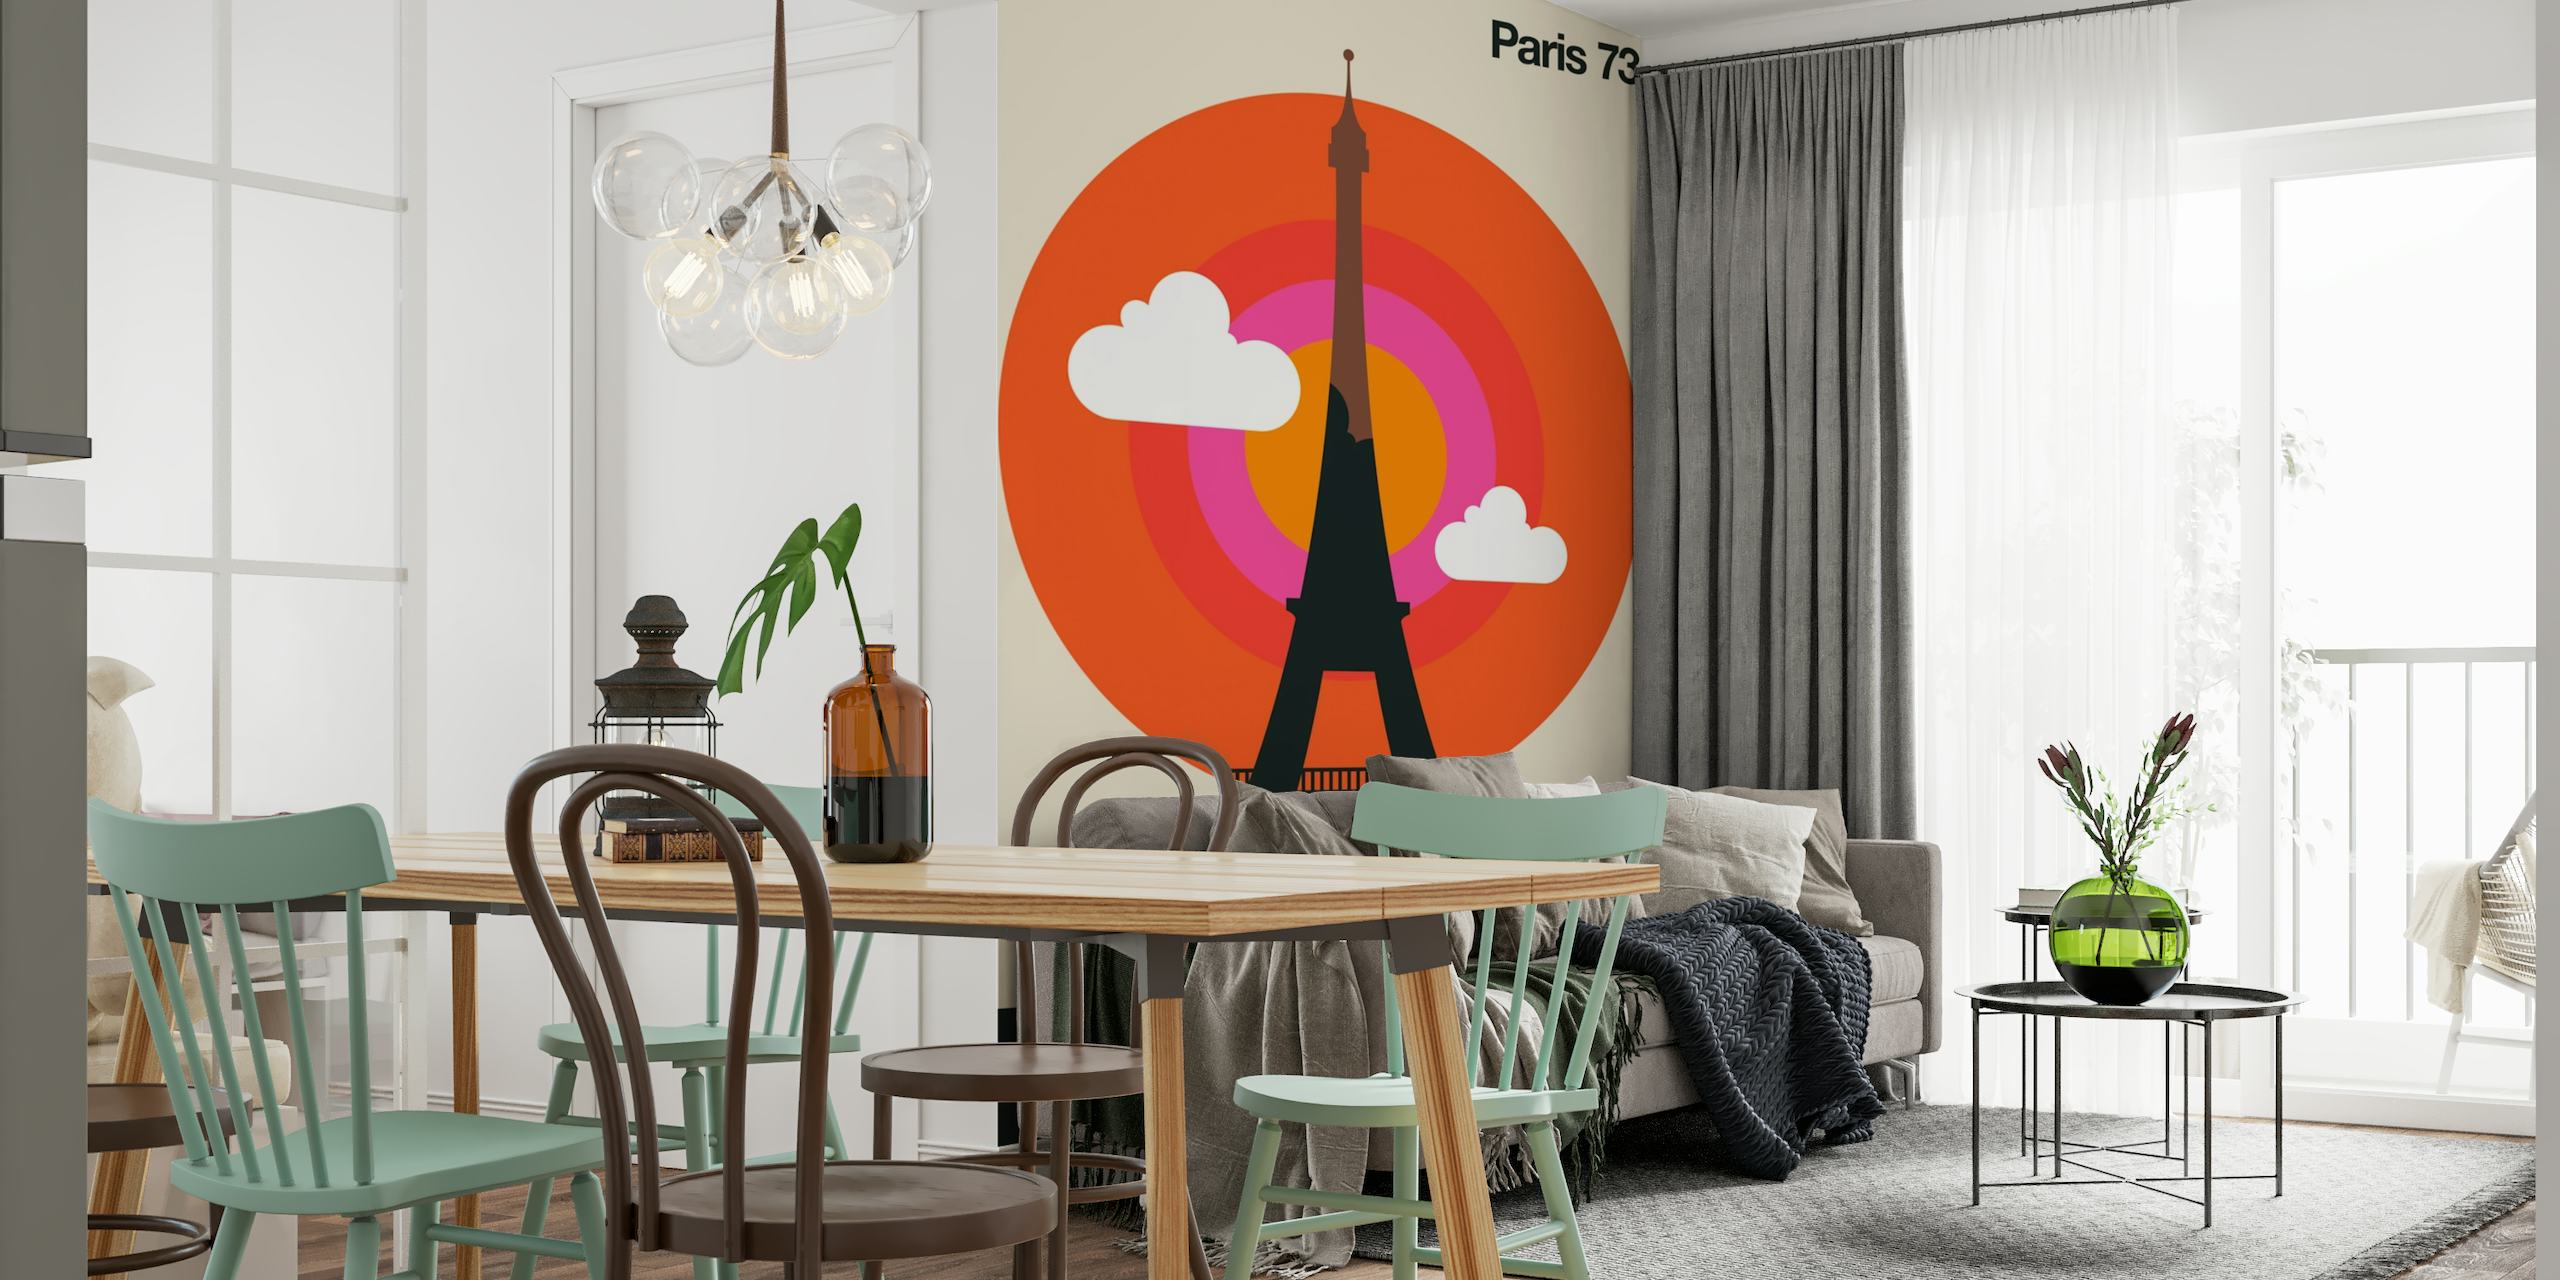 Paris 73 wallpaper